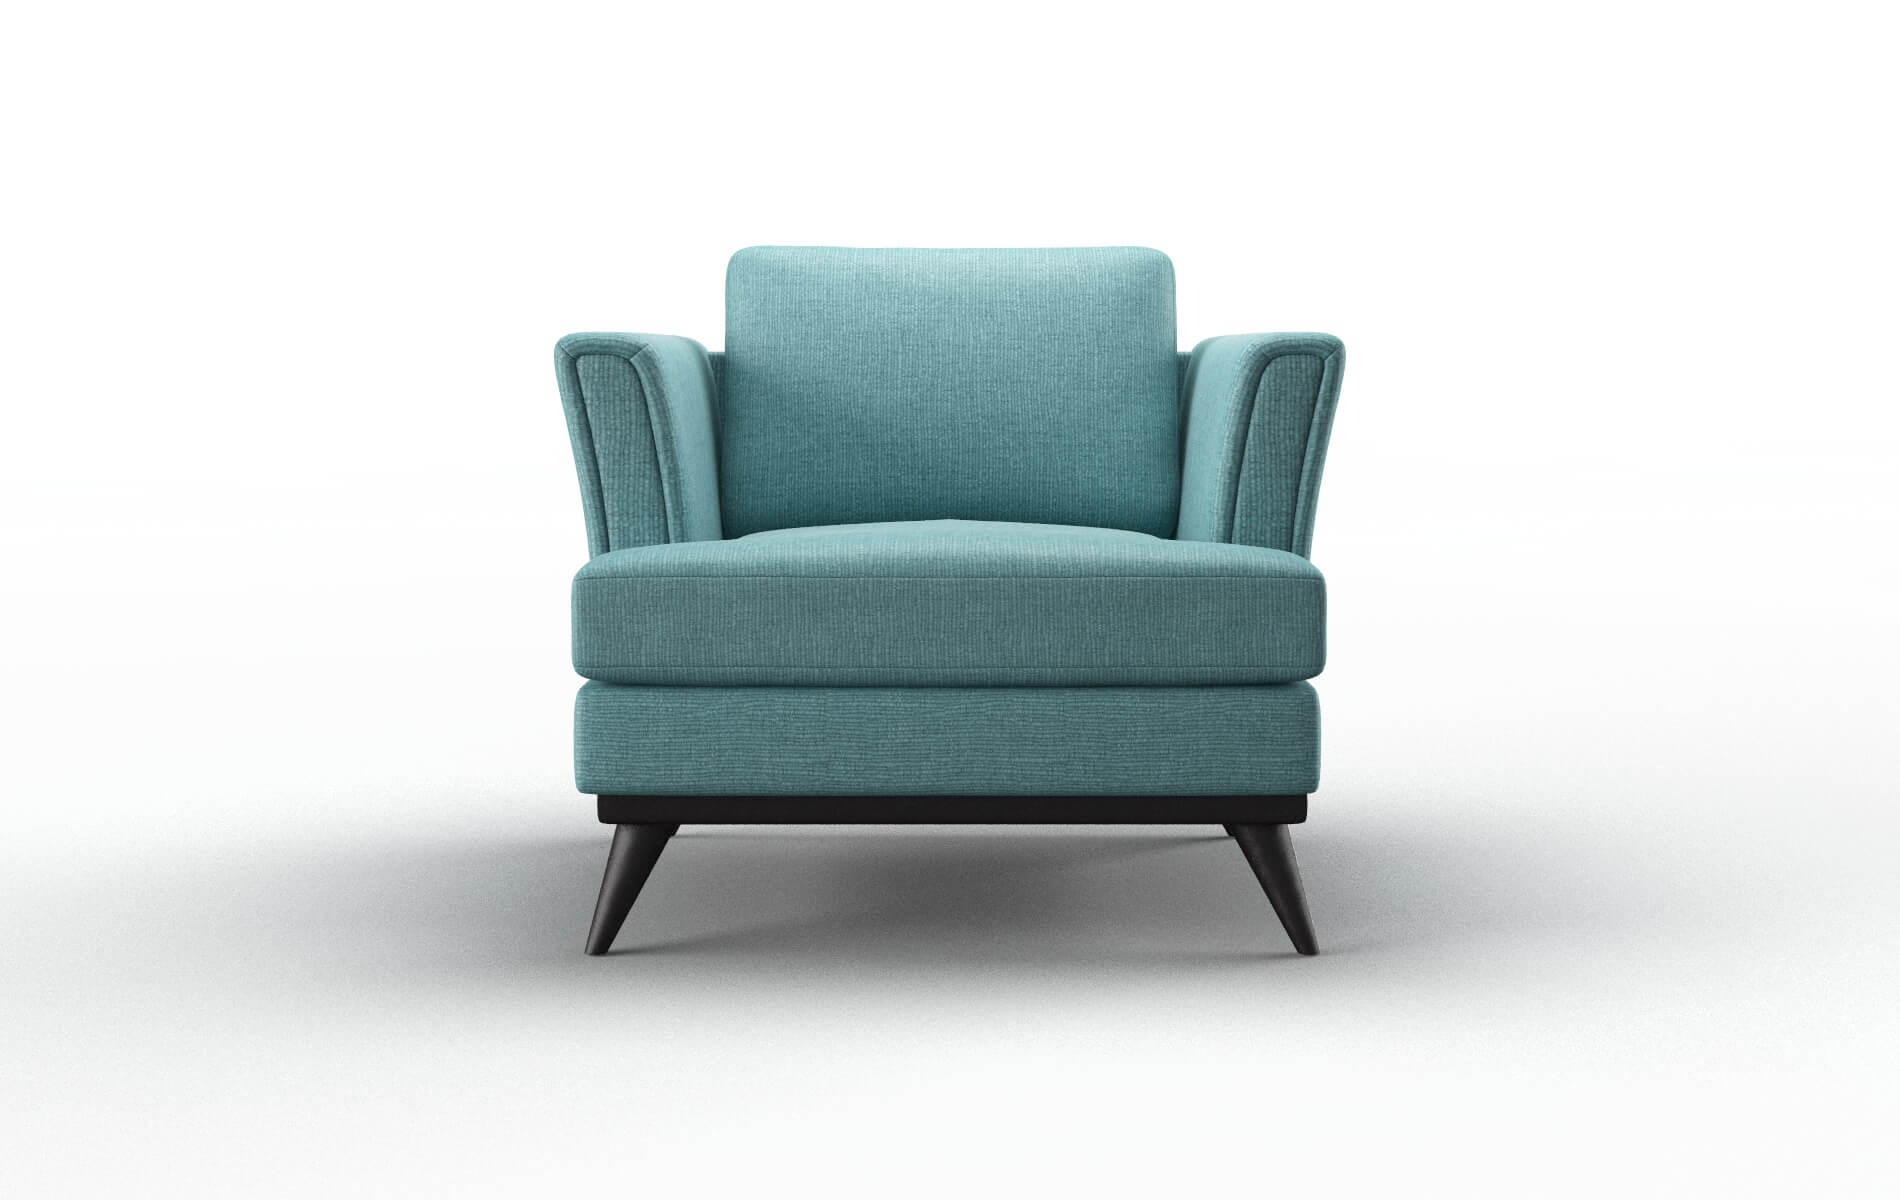 Antalya Parker Turquoise chair espresso legs